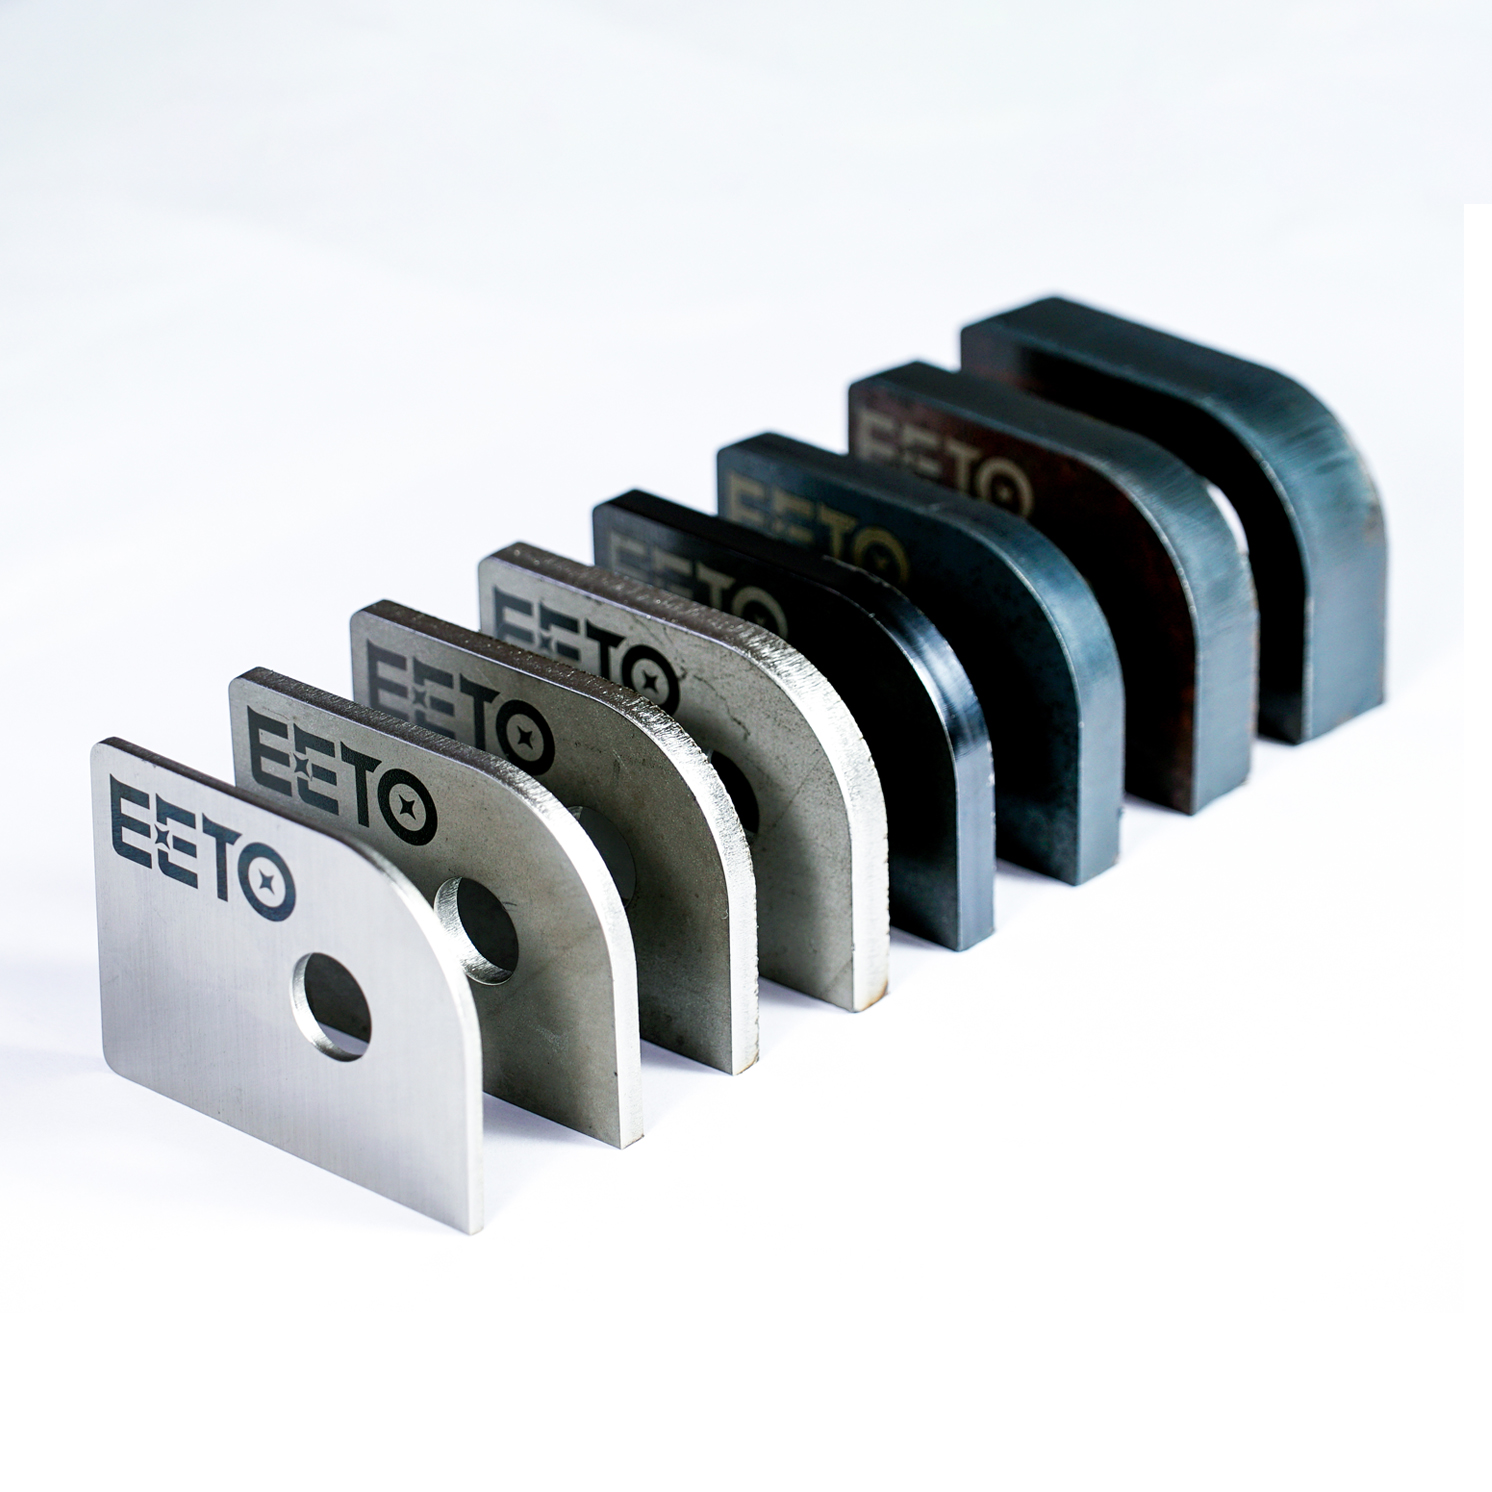  New Plate Fiber Optic Cutting Machine EETO FLS 6020 Series